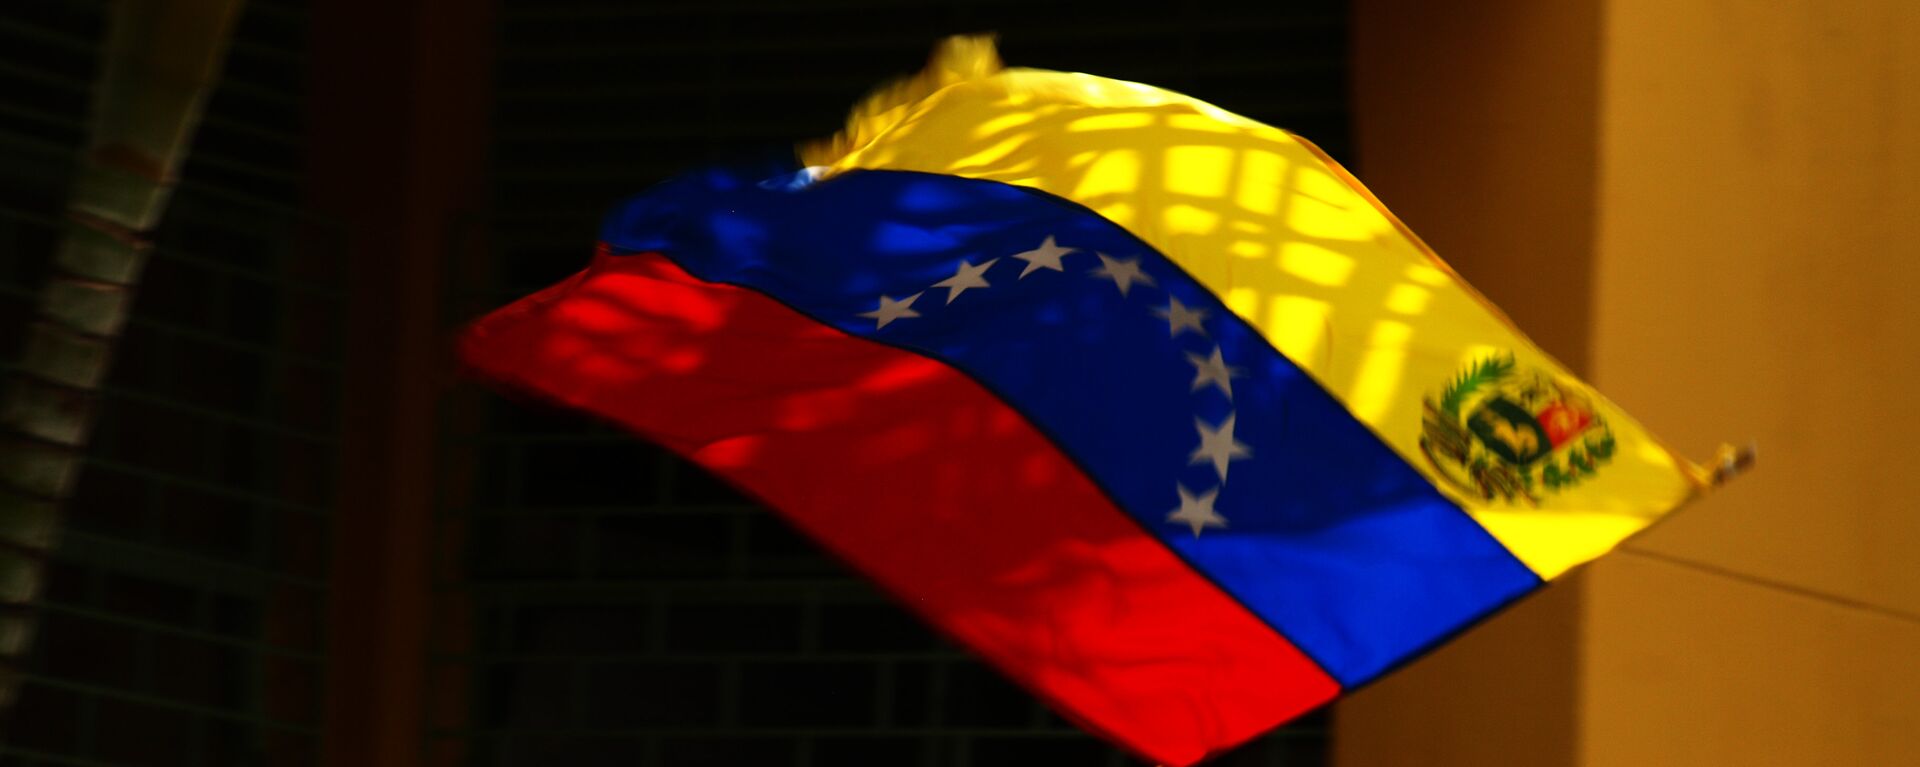 Bandera de Venezuela - Sputnik Mundo, 1920, 09.09.2021